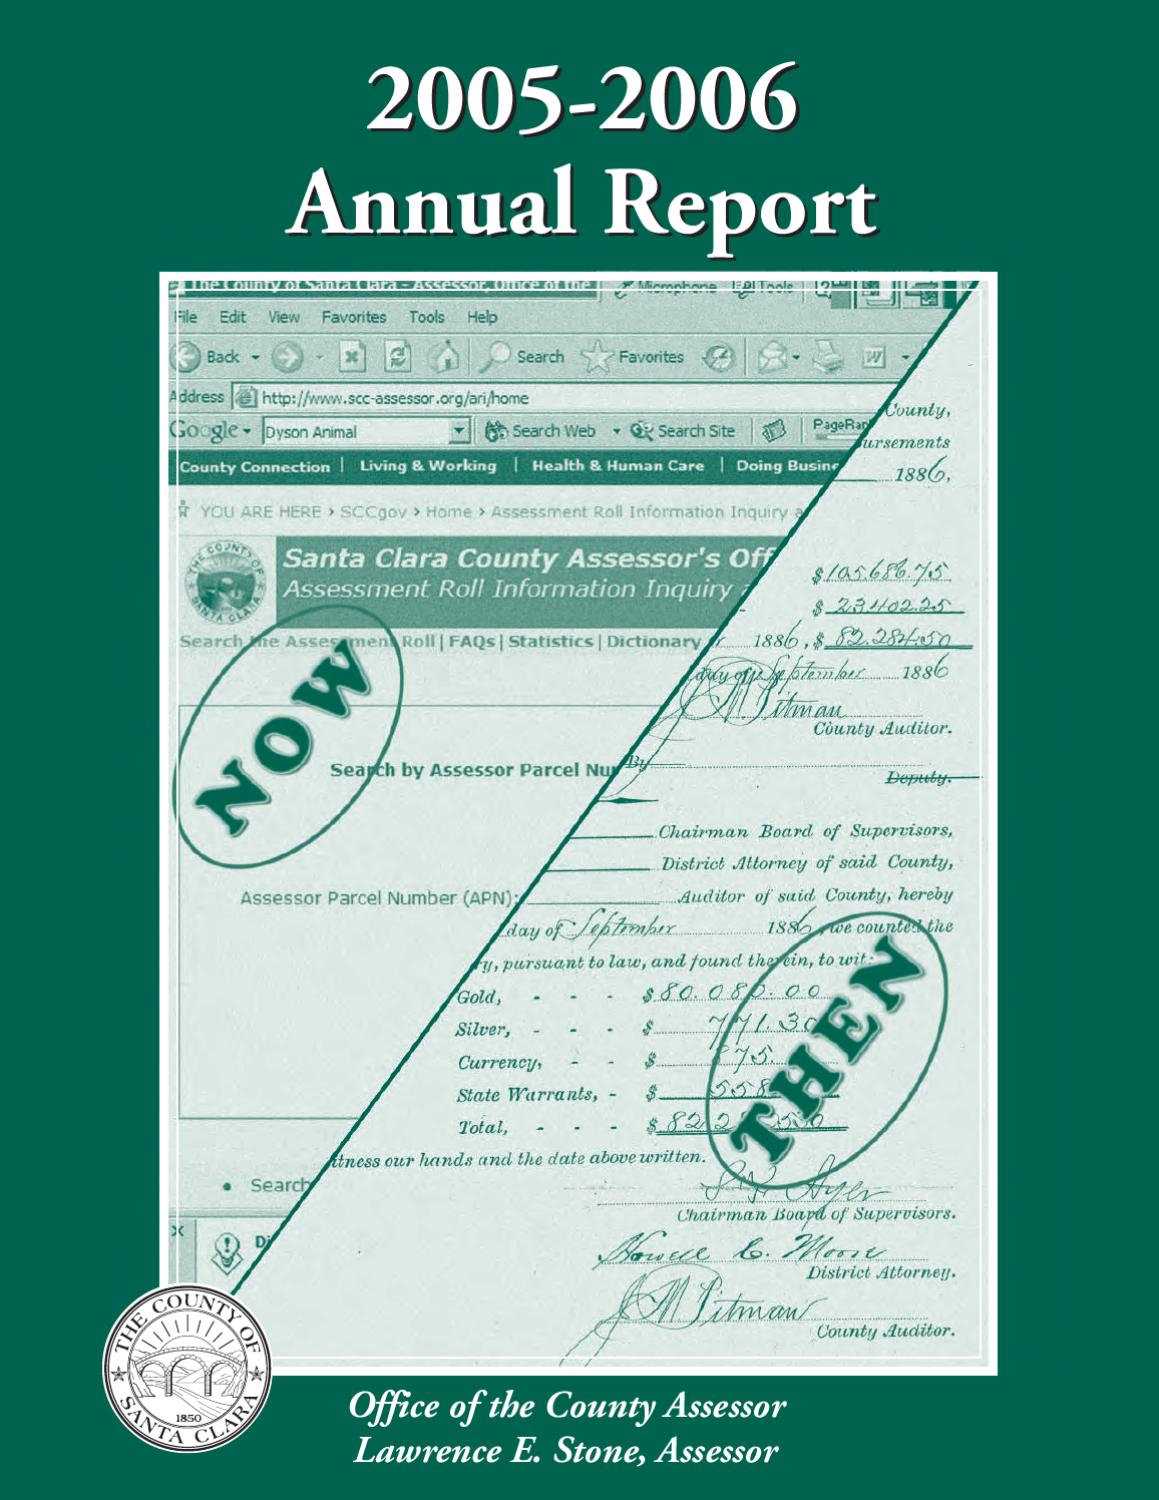 pennsylvania-property-tax-rent-rebate-5-free-templates-in-pdf-word